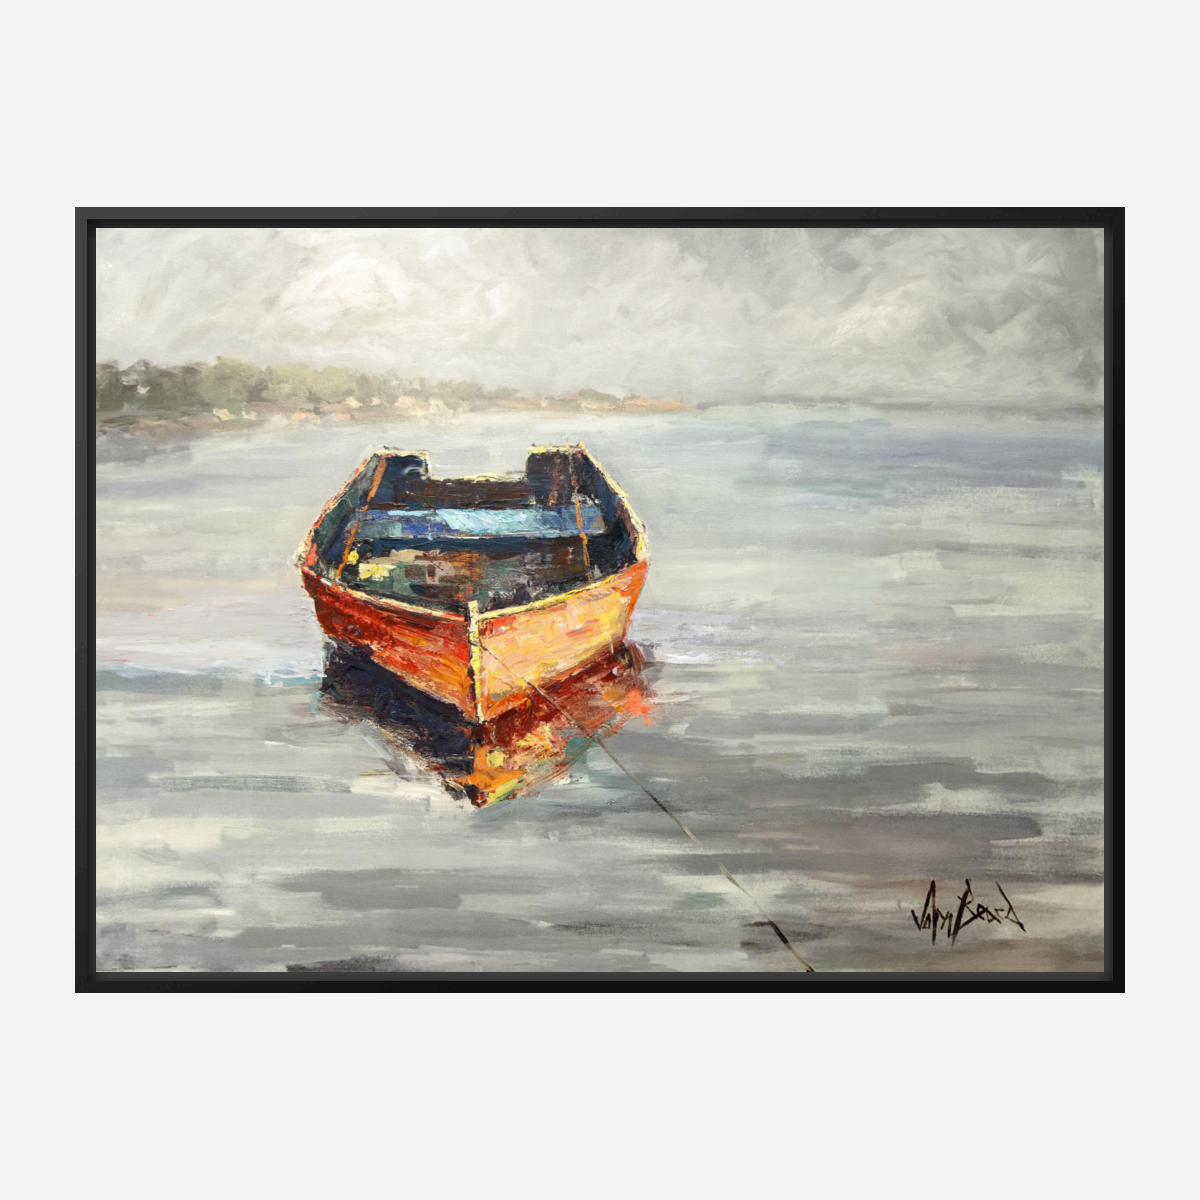 Our Boat Artist Enhanced Canvas Print